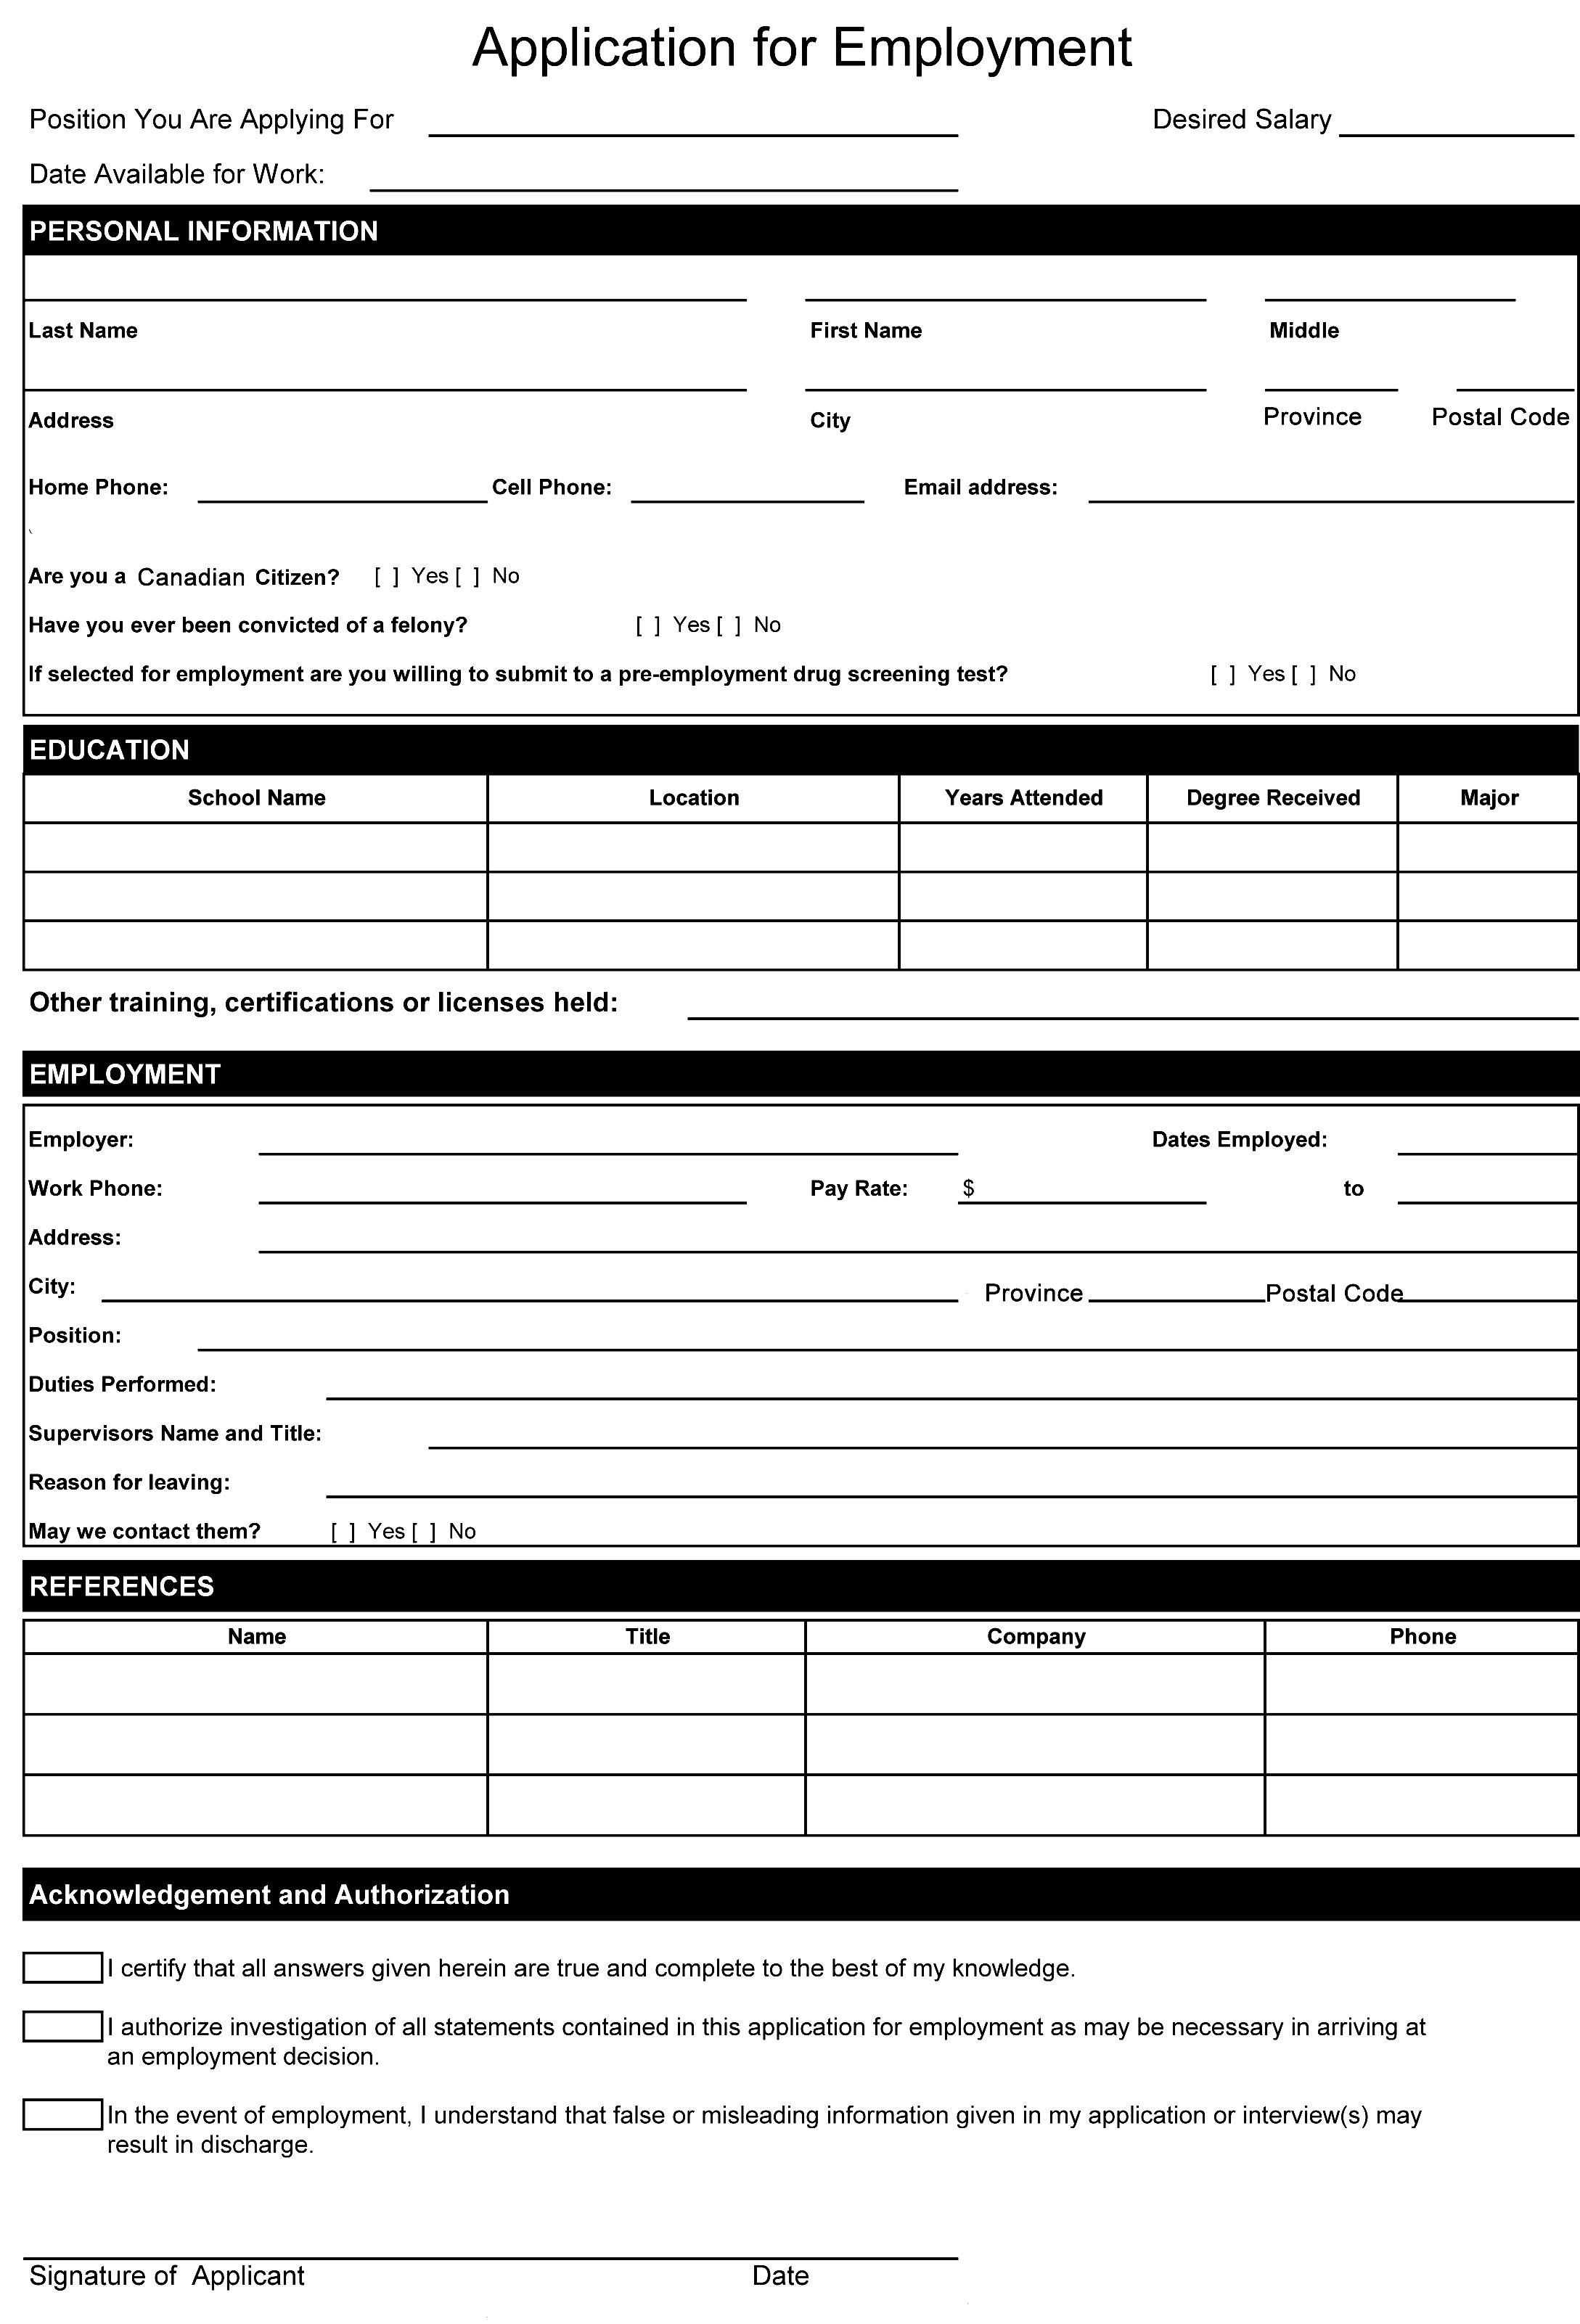 Resume Format Word Document | Resume Format | Job Regarding Job Application Template Word Document